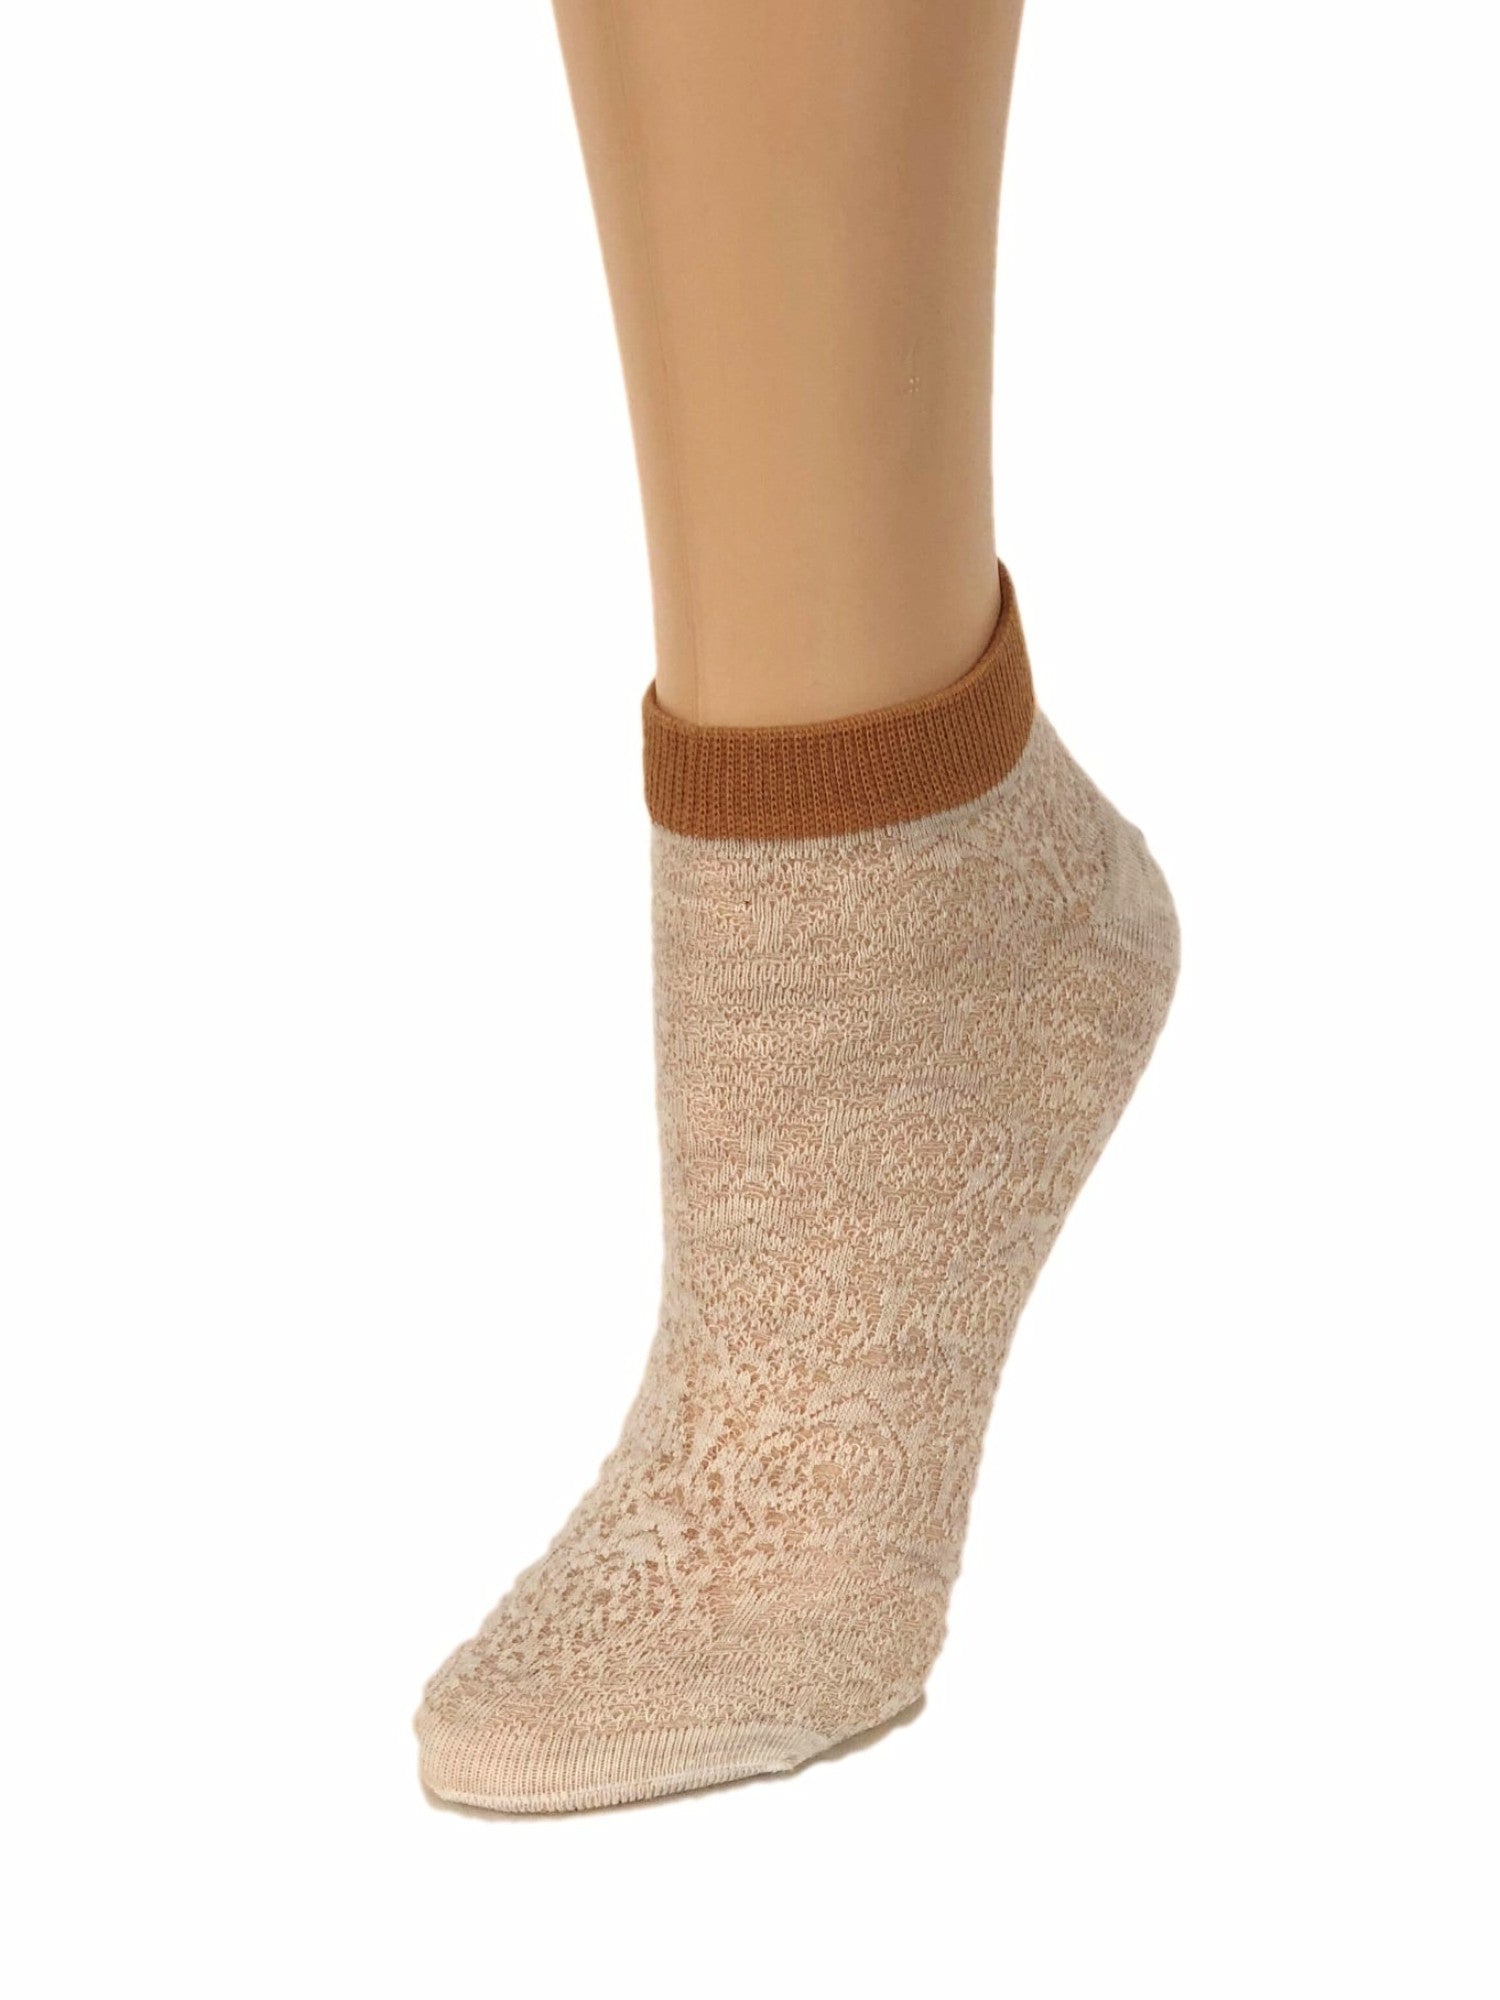 Maroon-Stripped Cream Ankle Sheer Socks - Global Trendz Fashion®